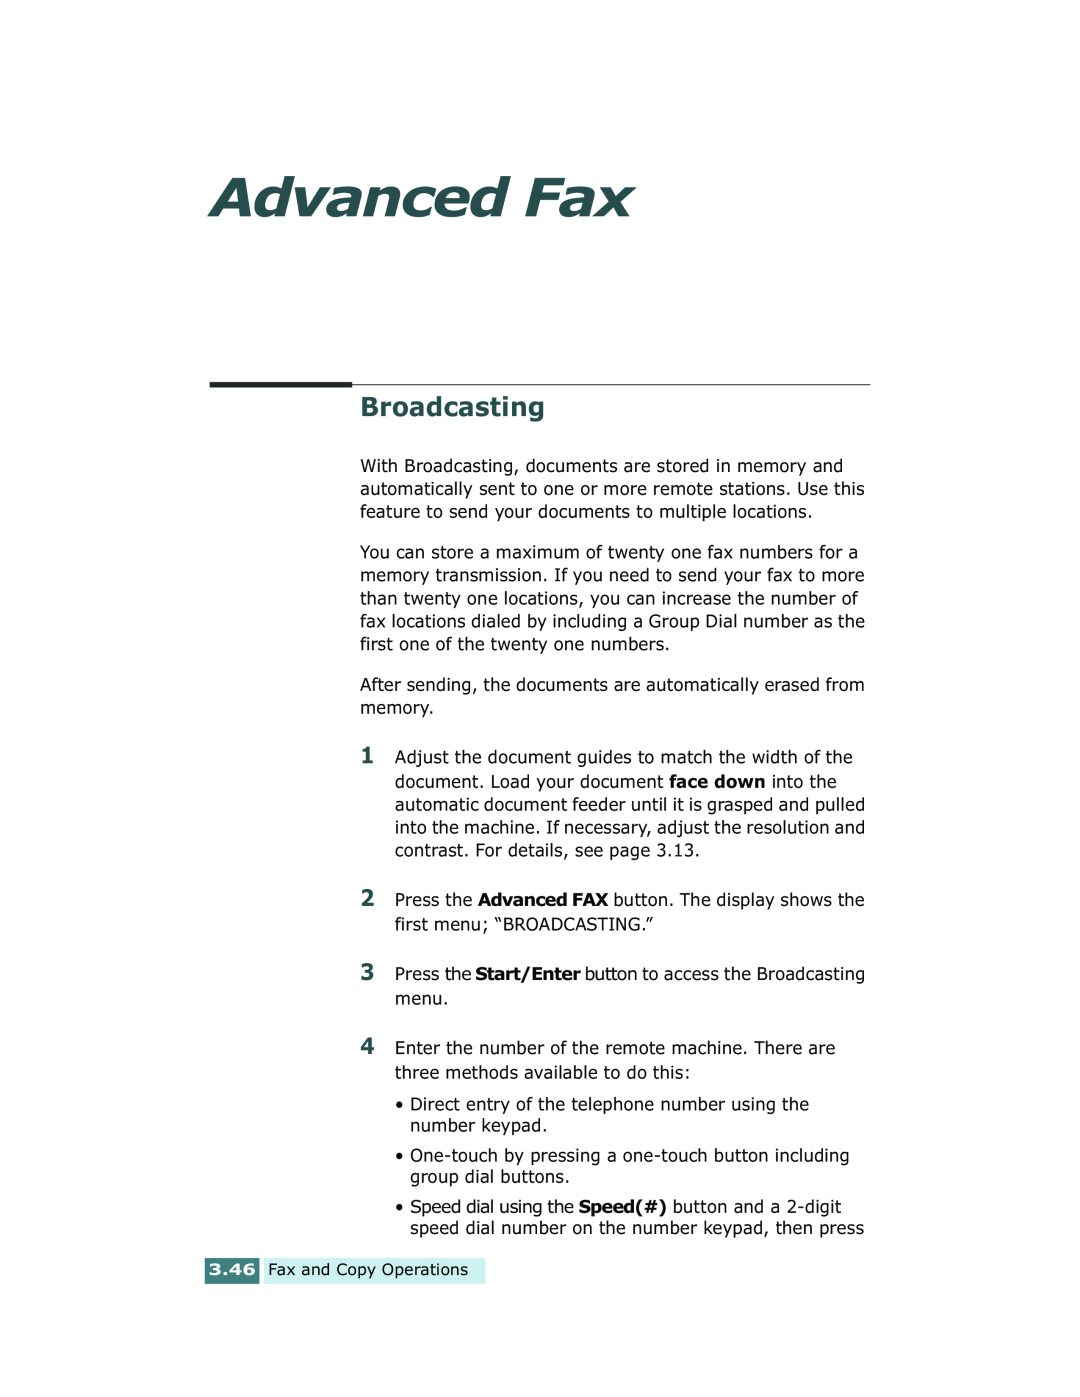 Xerox Pro 580 manual Advanced Fax, Broadcasting 